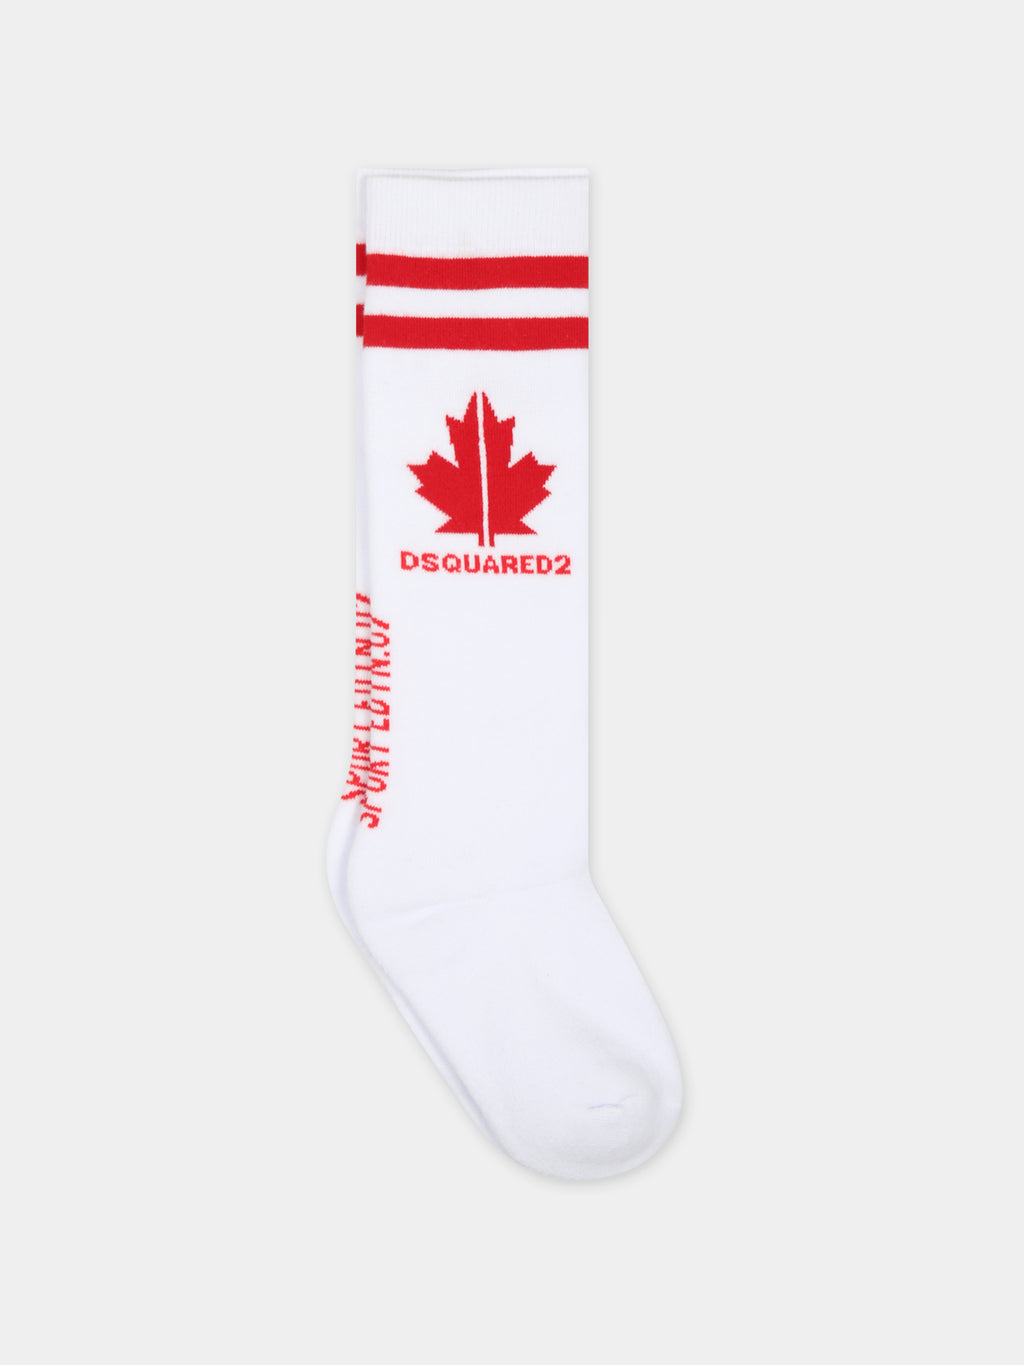 White socks for boy with logo